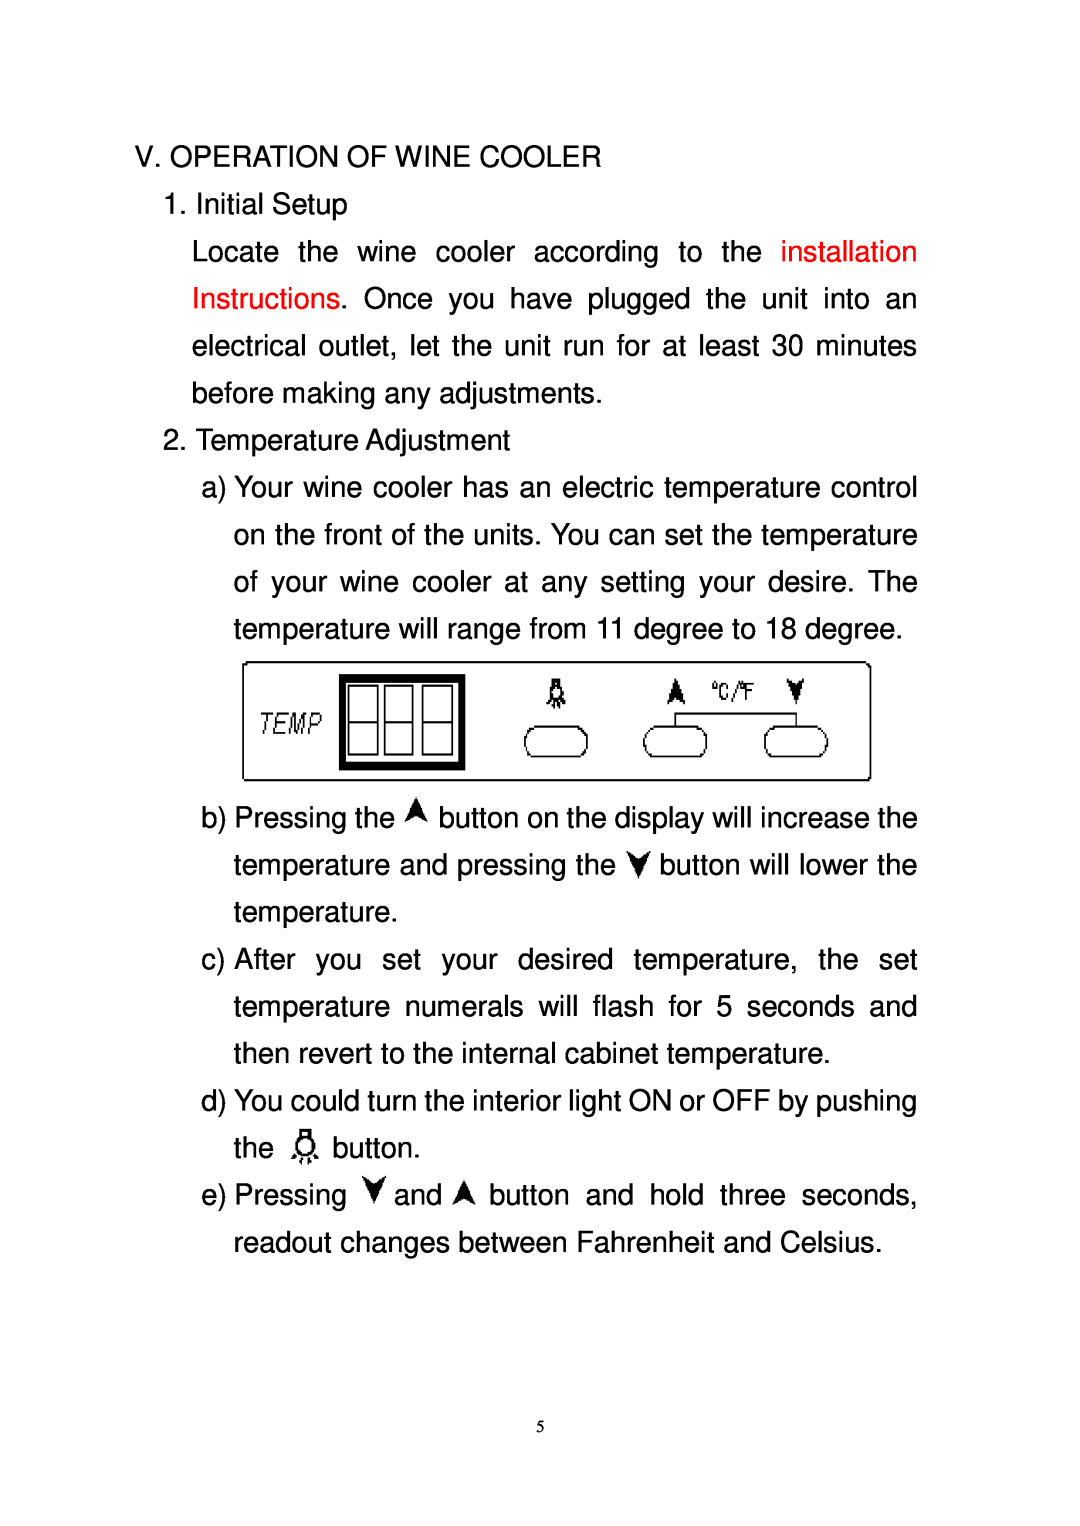 Igloo FRW218B operation manual V. OPERATION OF WINE COOLER 1. Initial Setup, Temperature Adjustment 